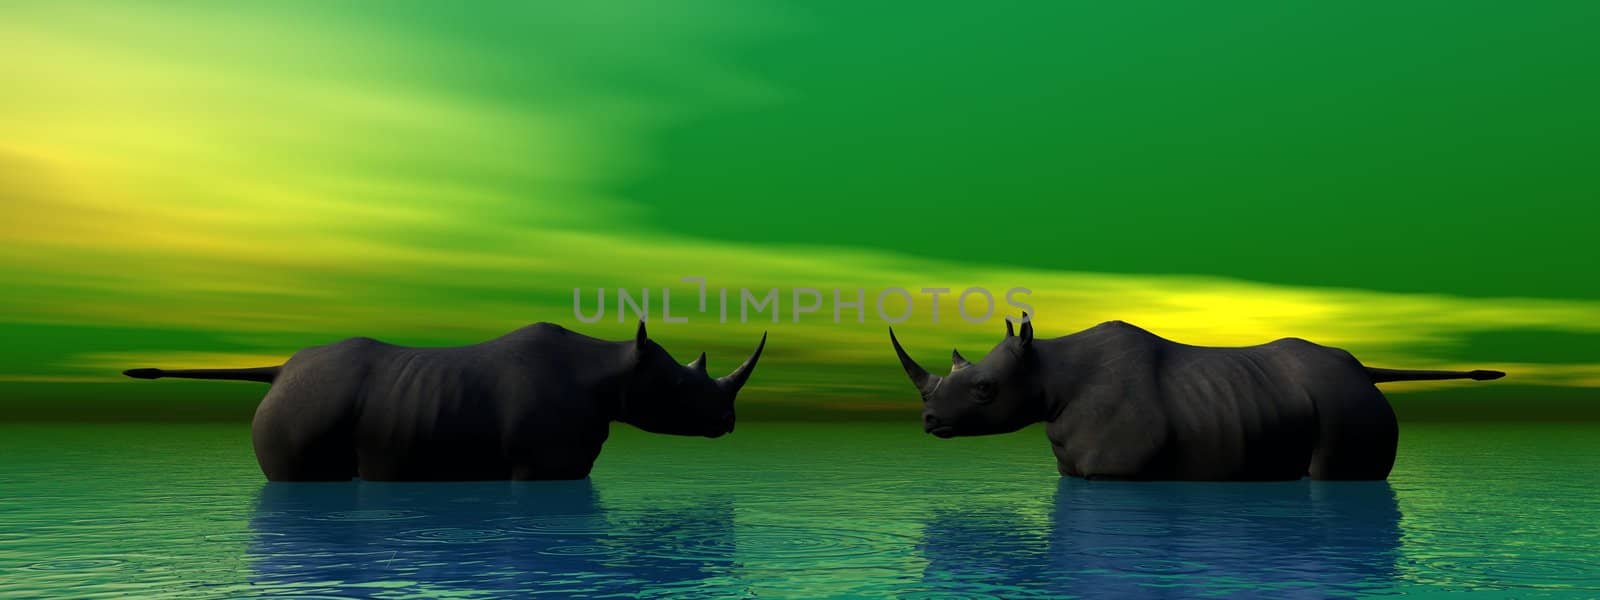 rhinoceros by mariephotos